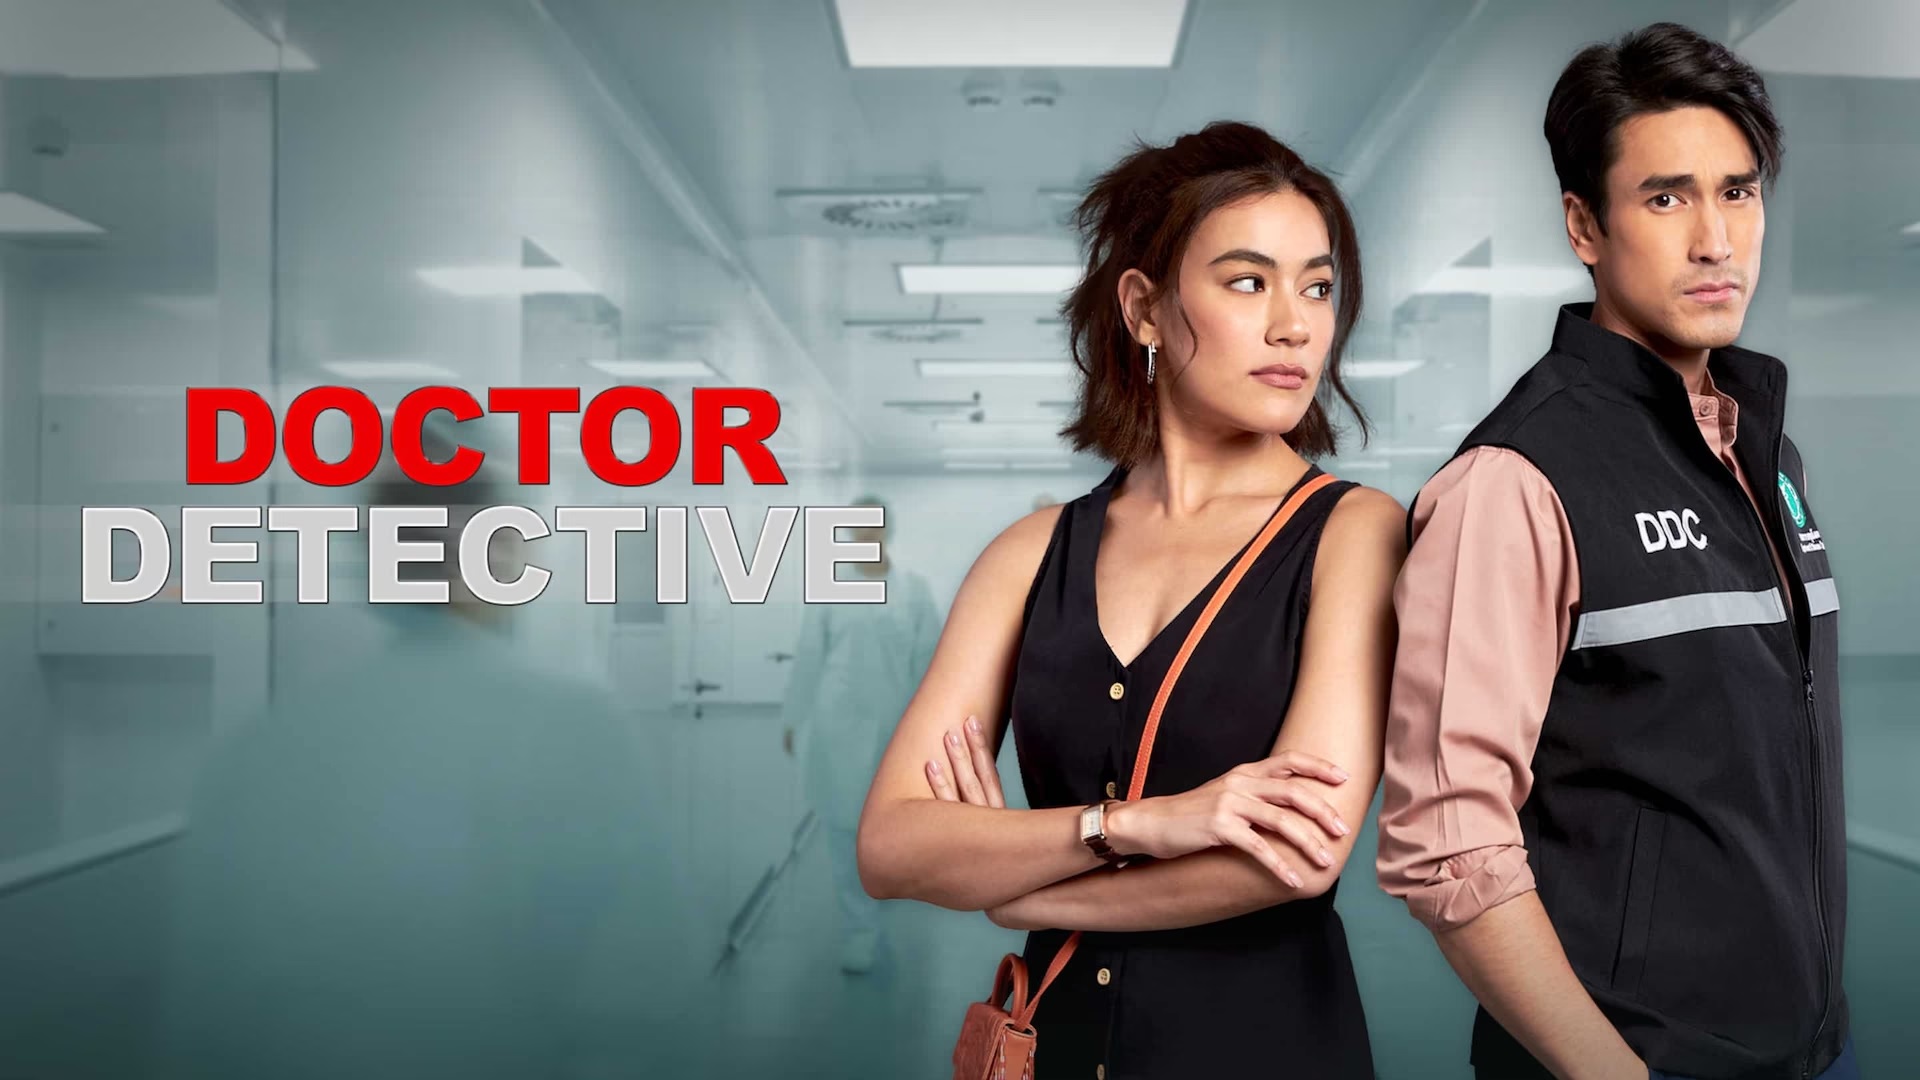 Doctor Detective Season 1 Episode 7 Release Date